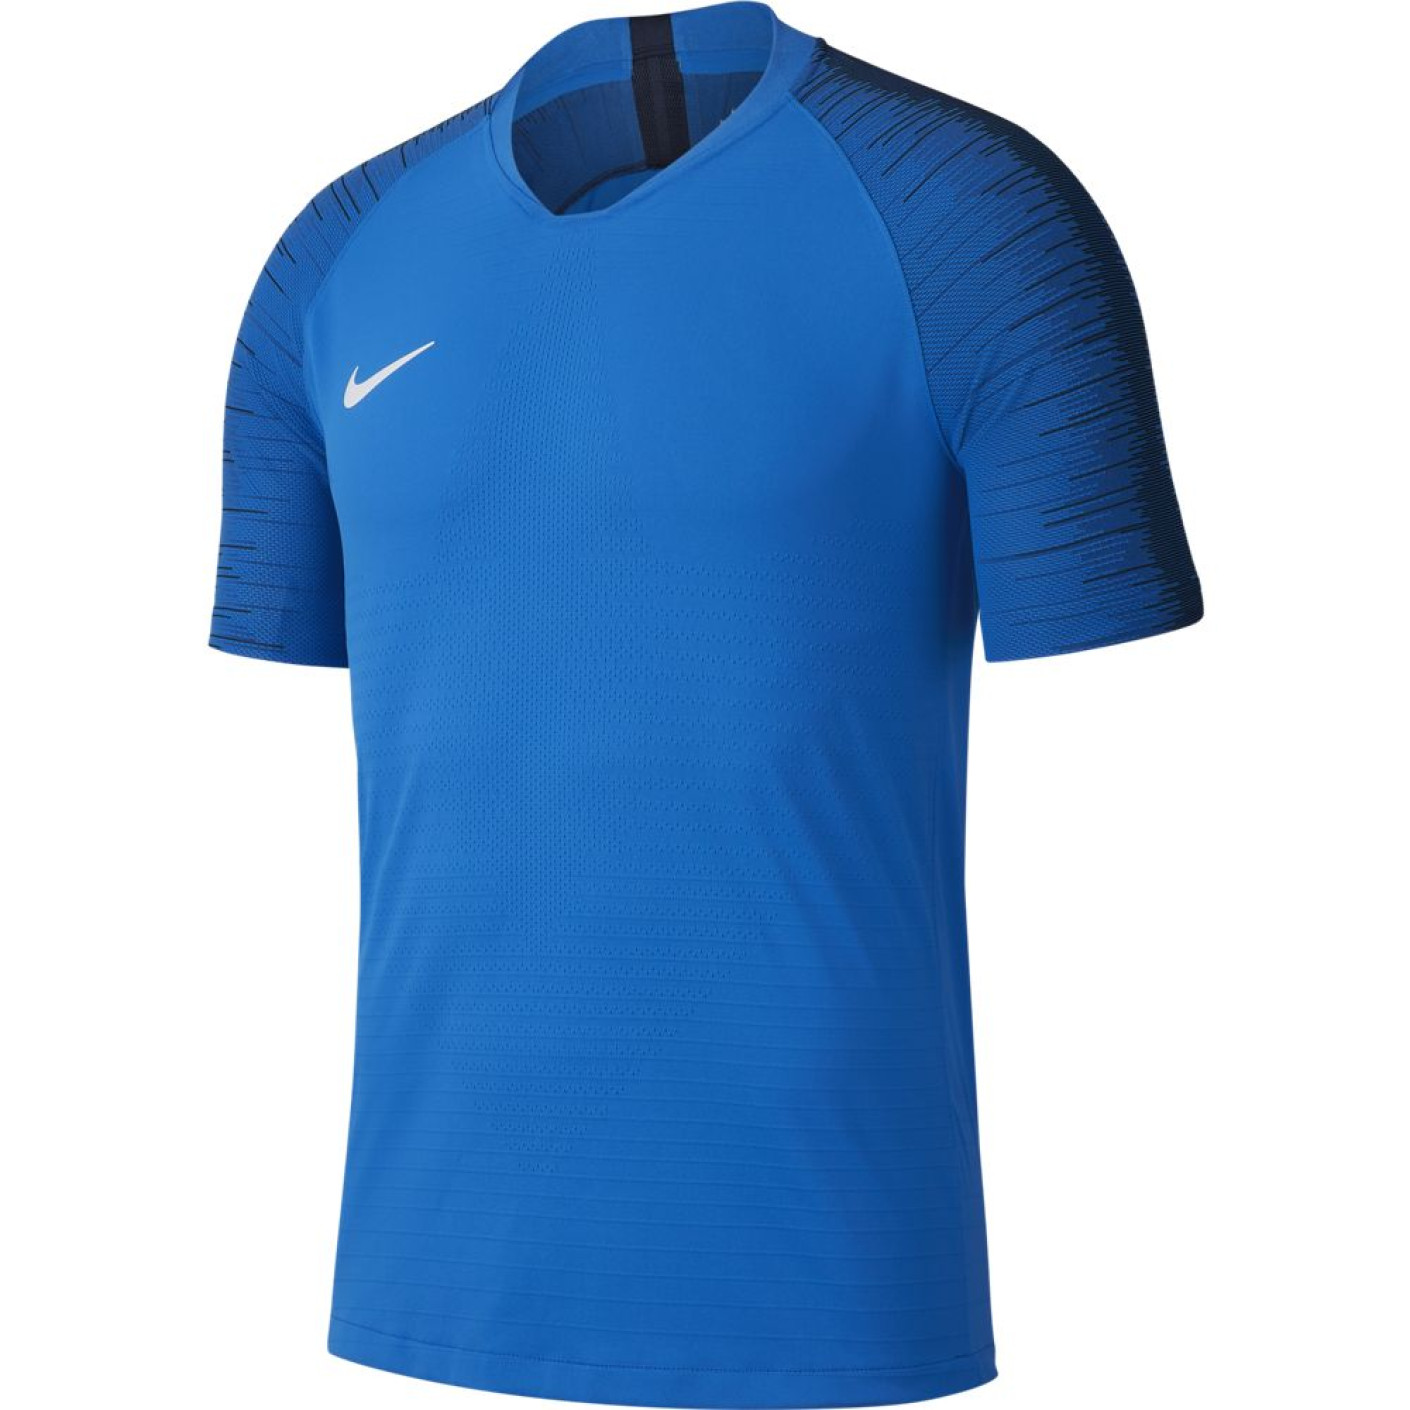 Maillot de foot Nike VaporKnit II Bleu Royal